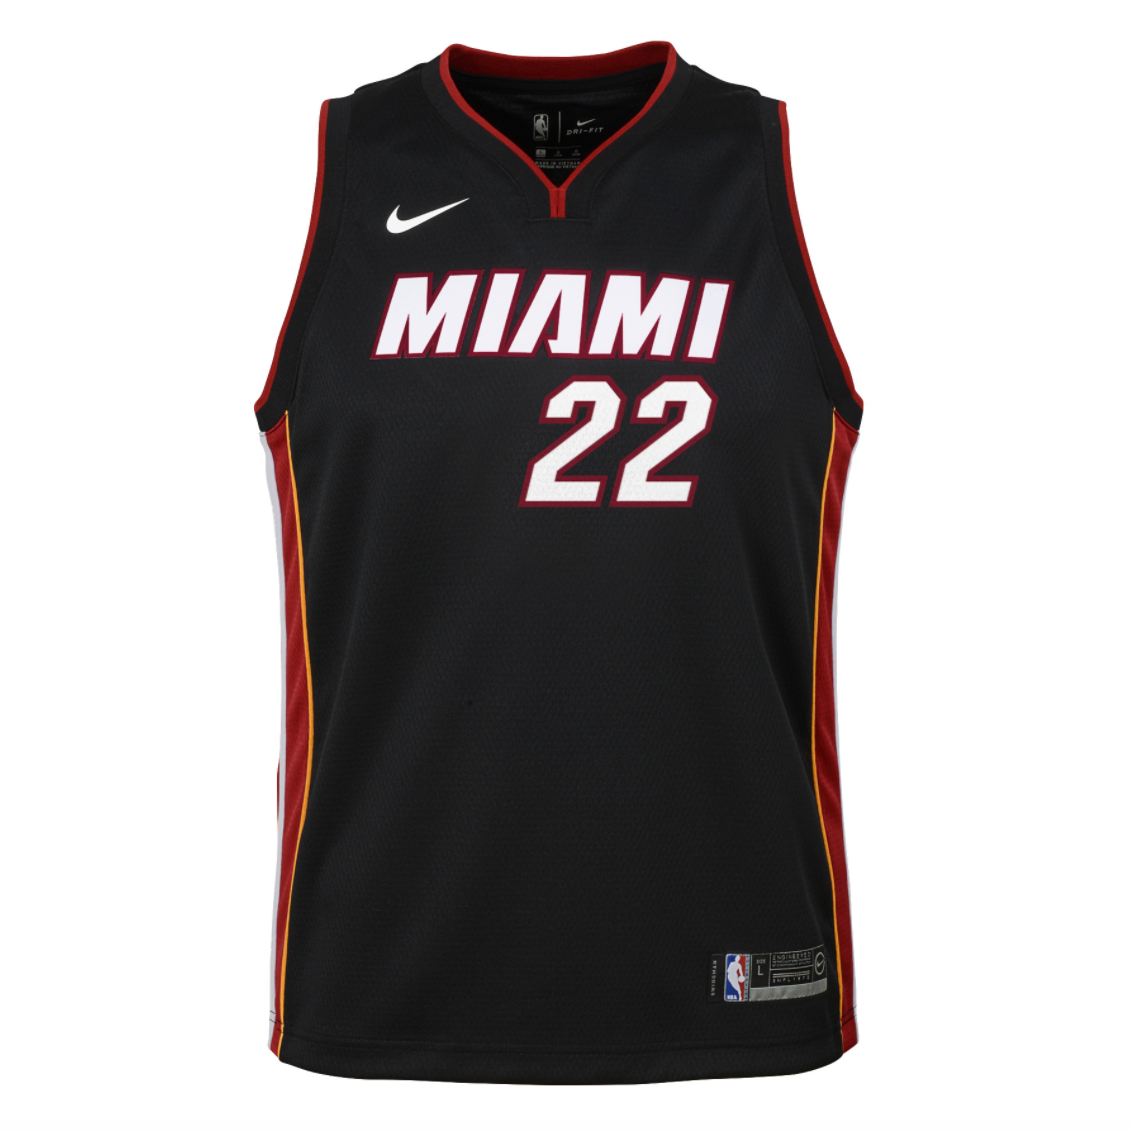 Miami Heat Jordan Statement Edition Swingman Jersey 22 - Red - Jimmy Butler  - Youth